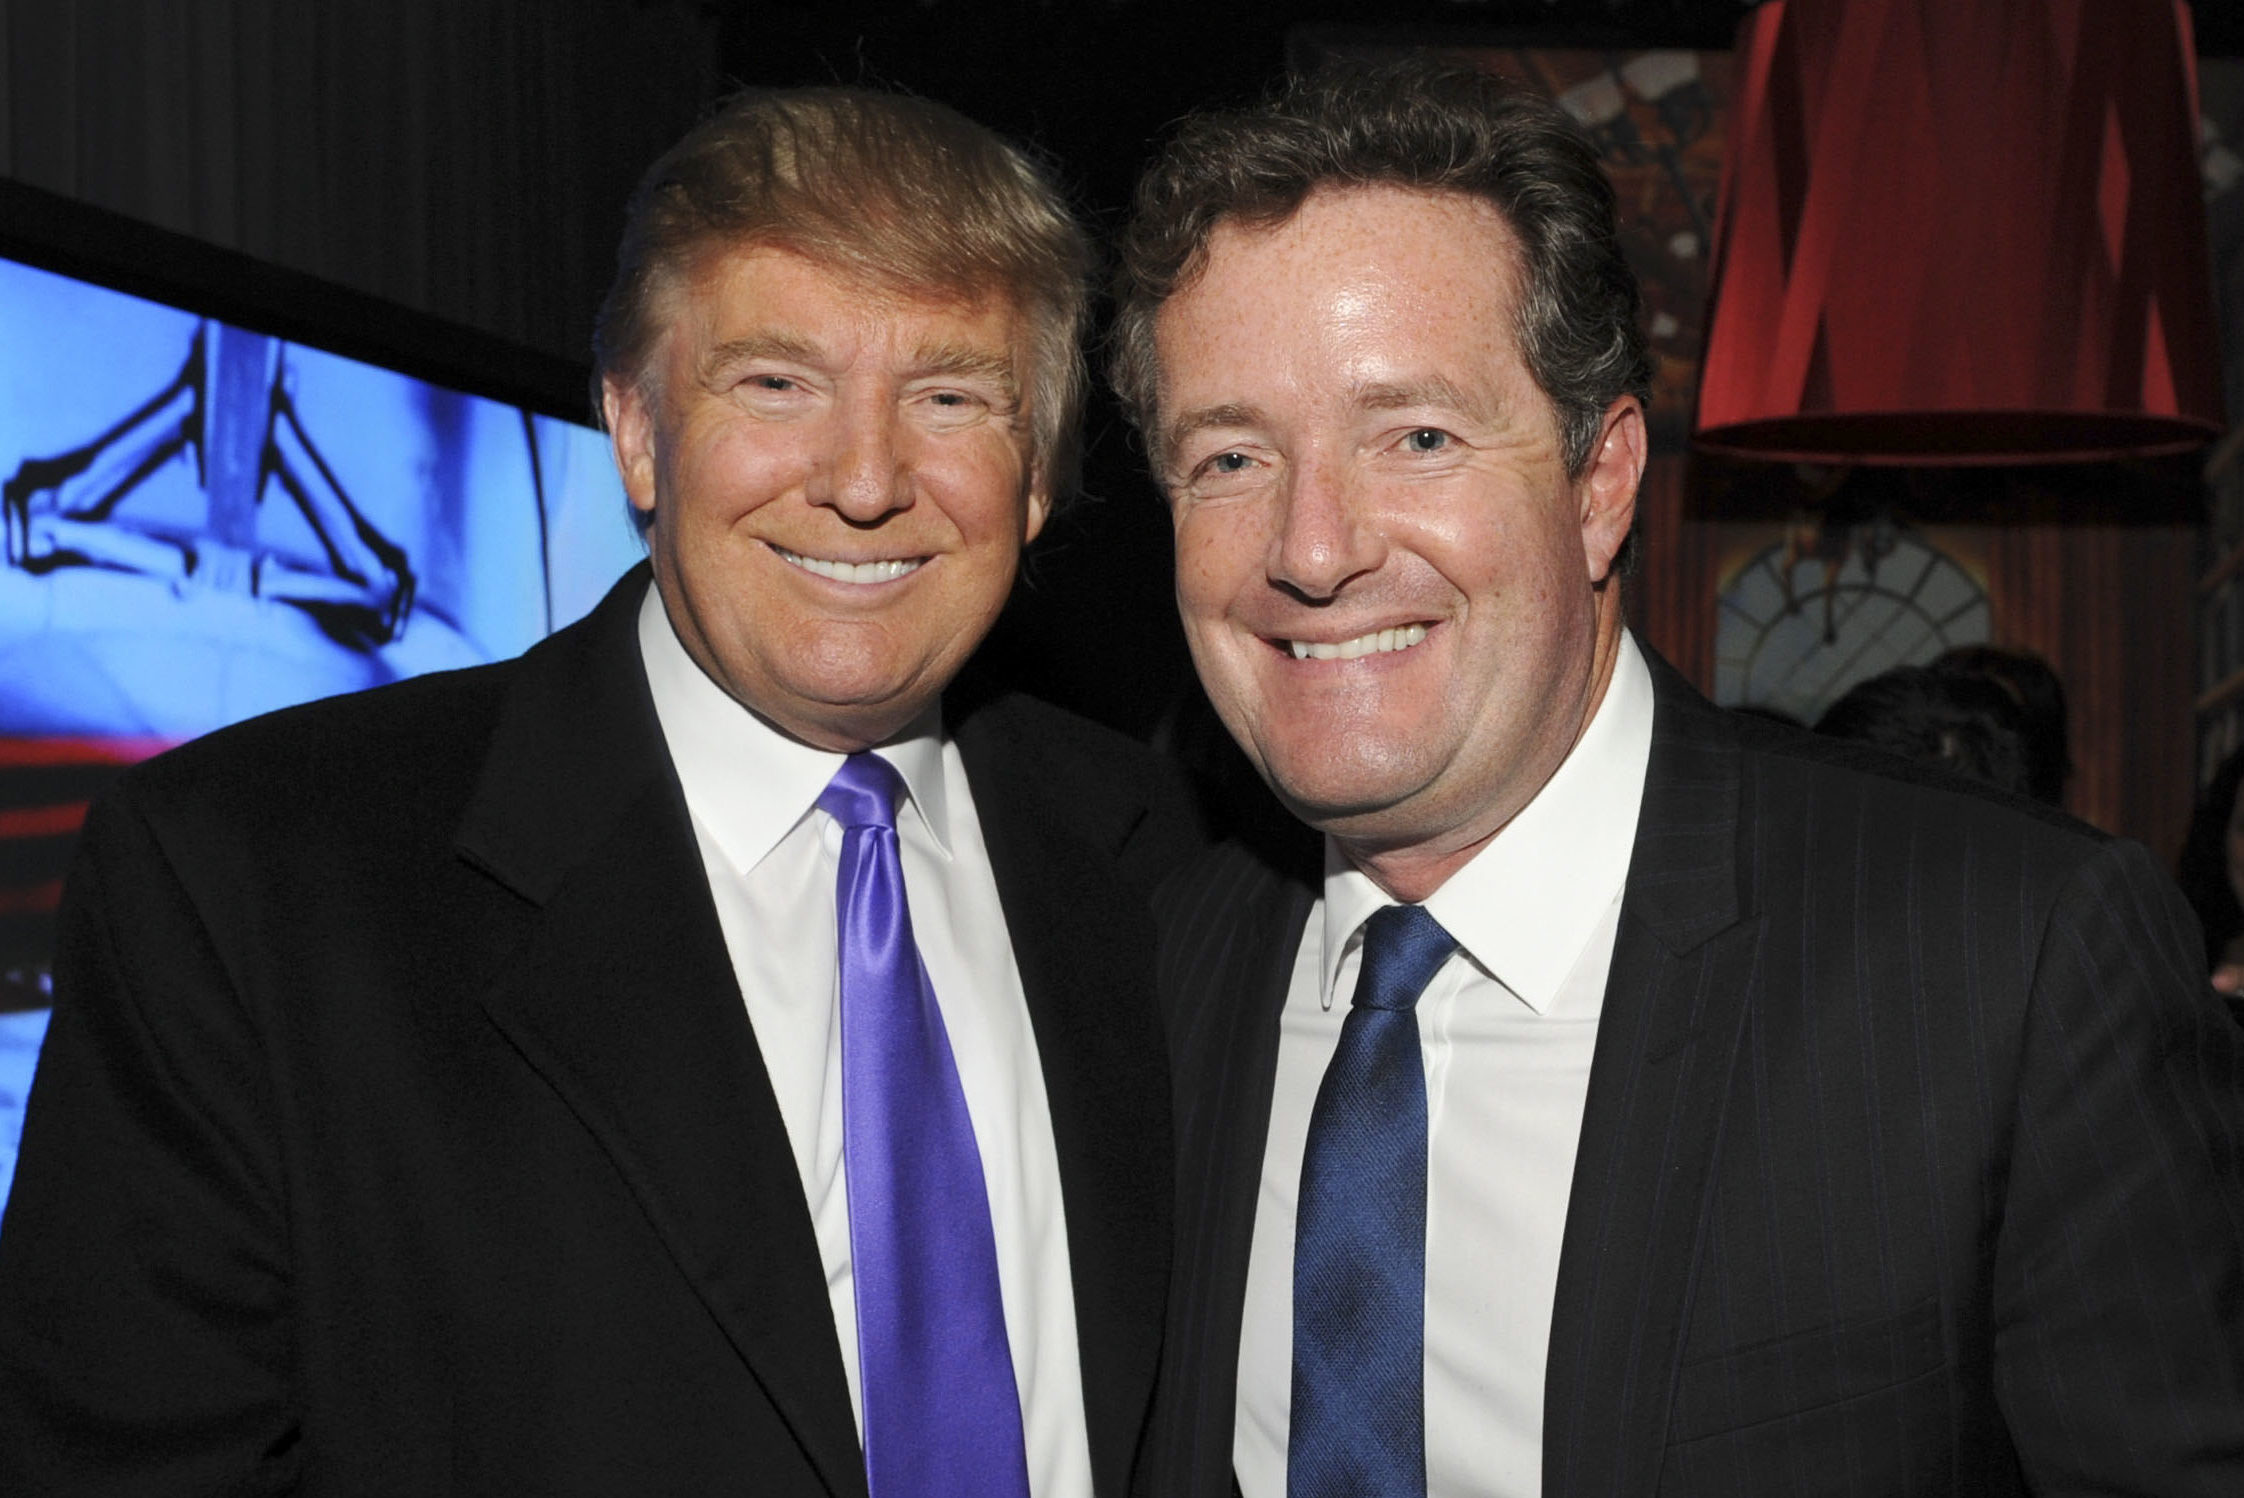 Piers Morgan and Donald Trump